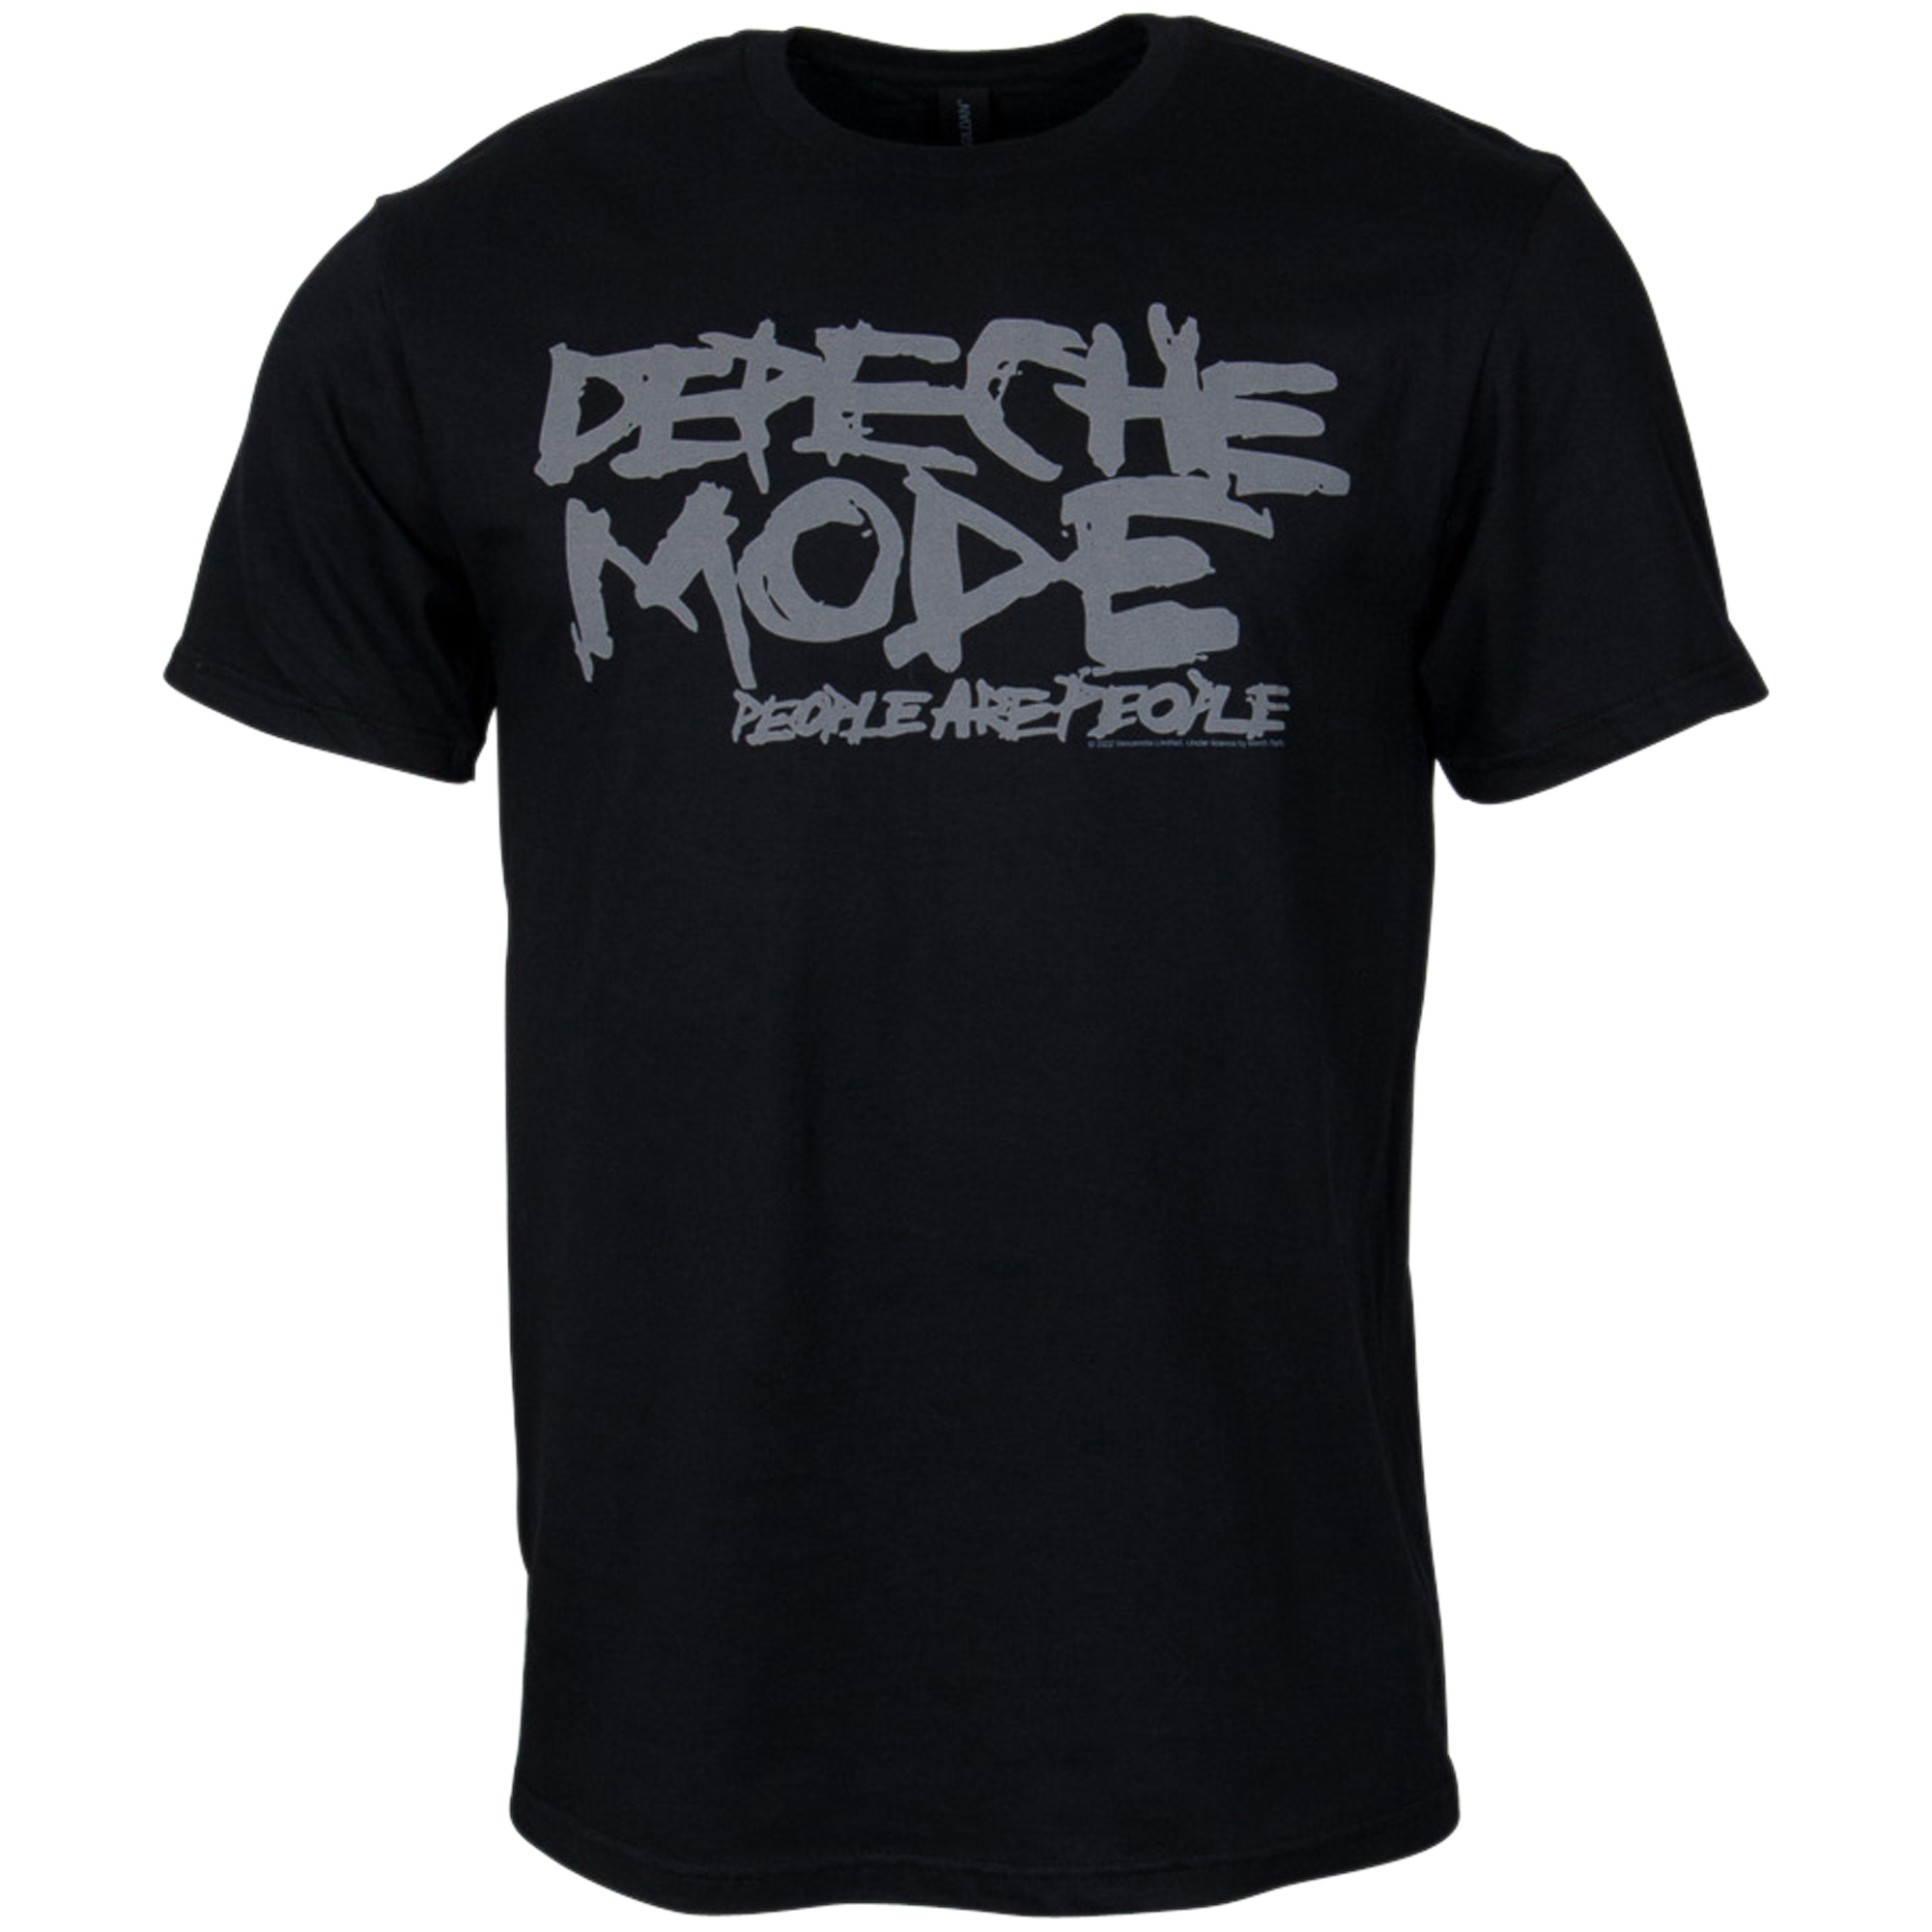 Depeche Mode - T-Shirt People are People - schwarz